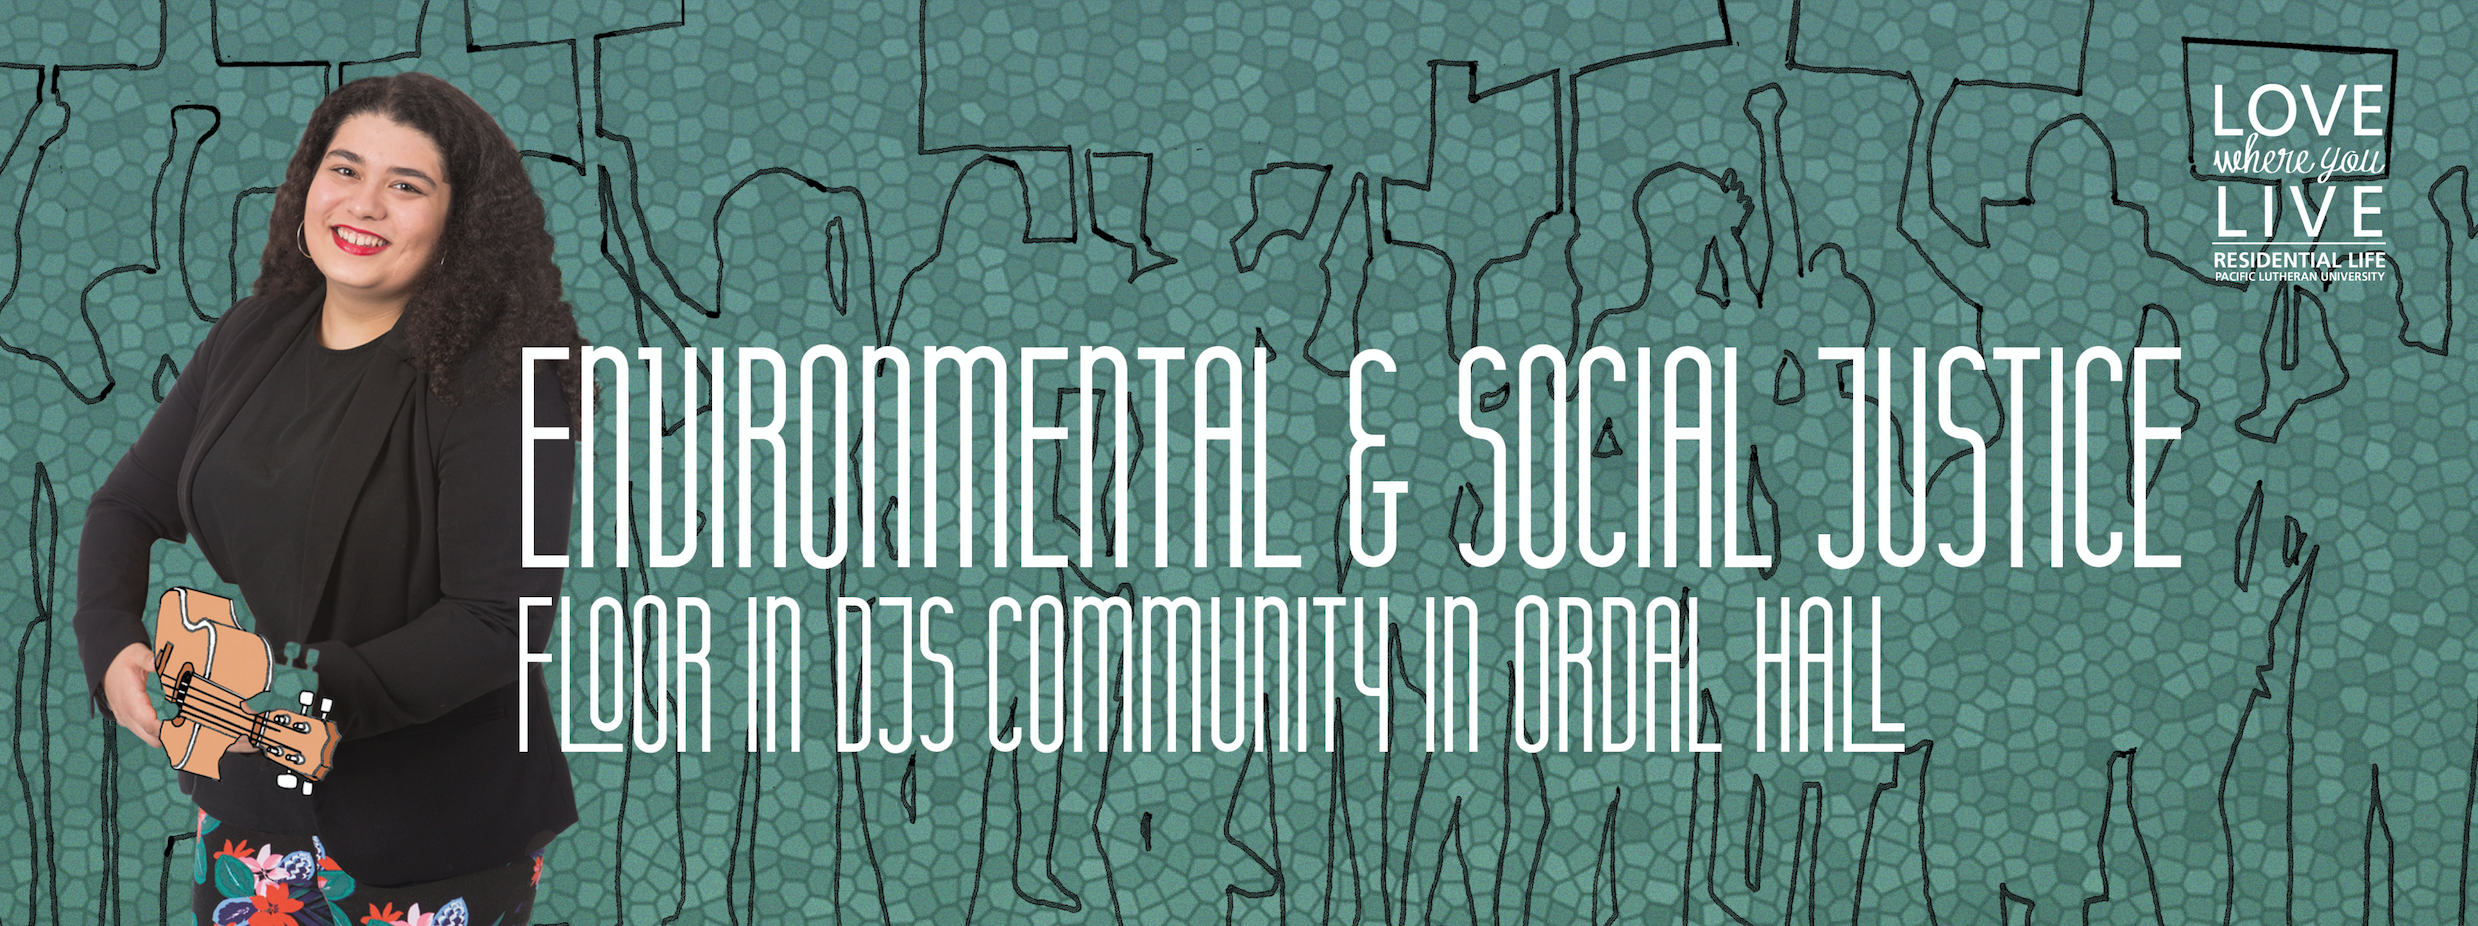 Environmental & Social Justice in Ordal Hall